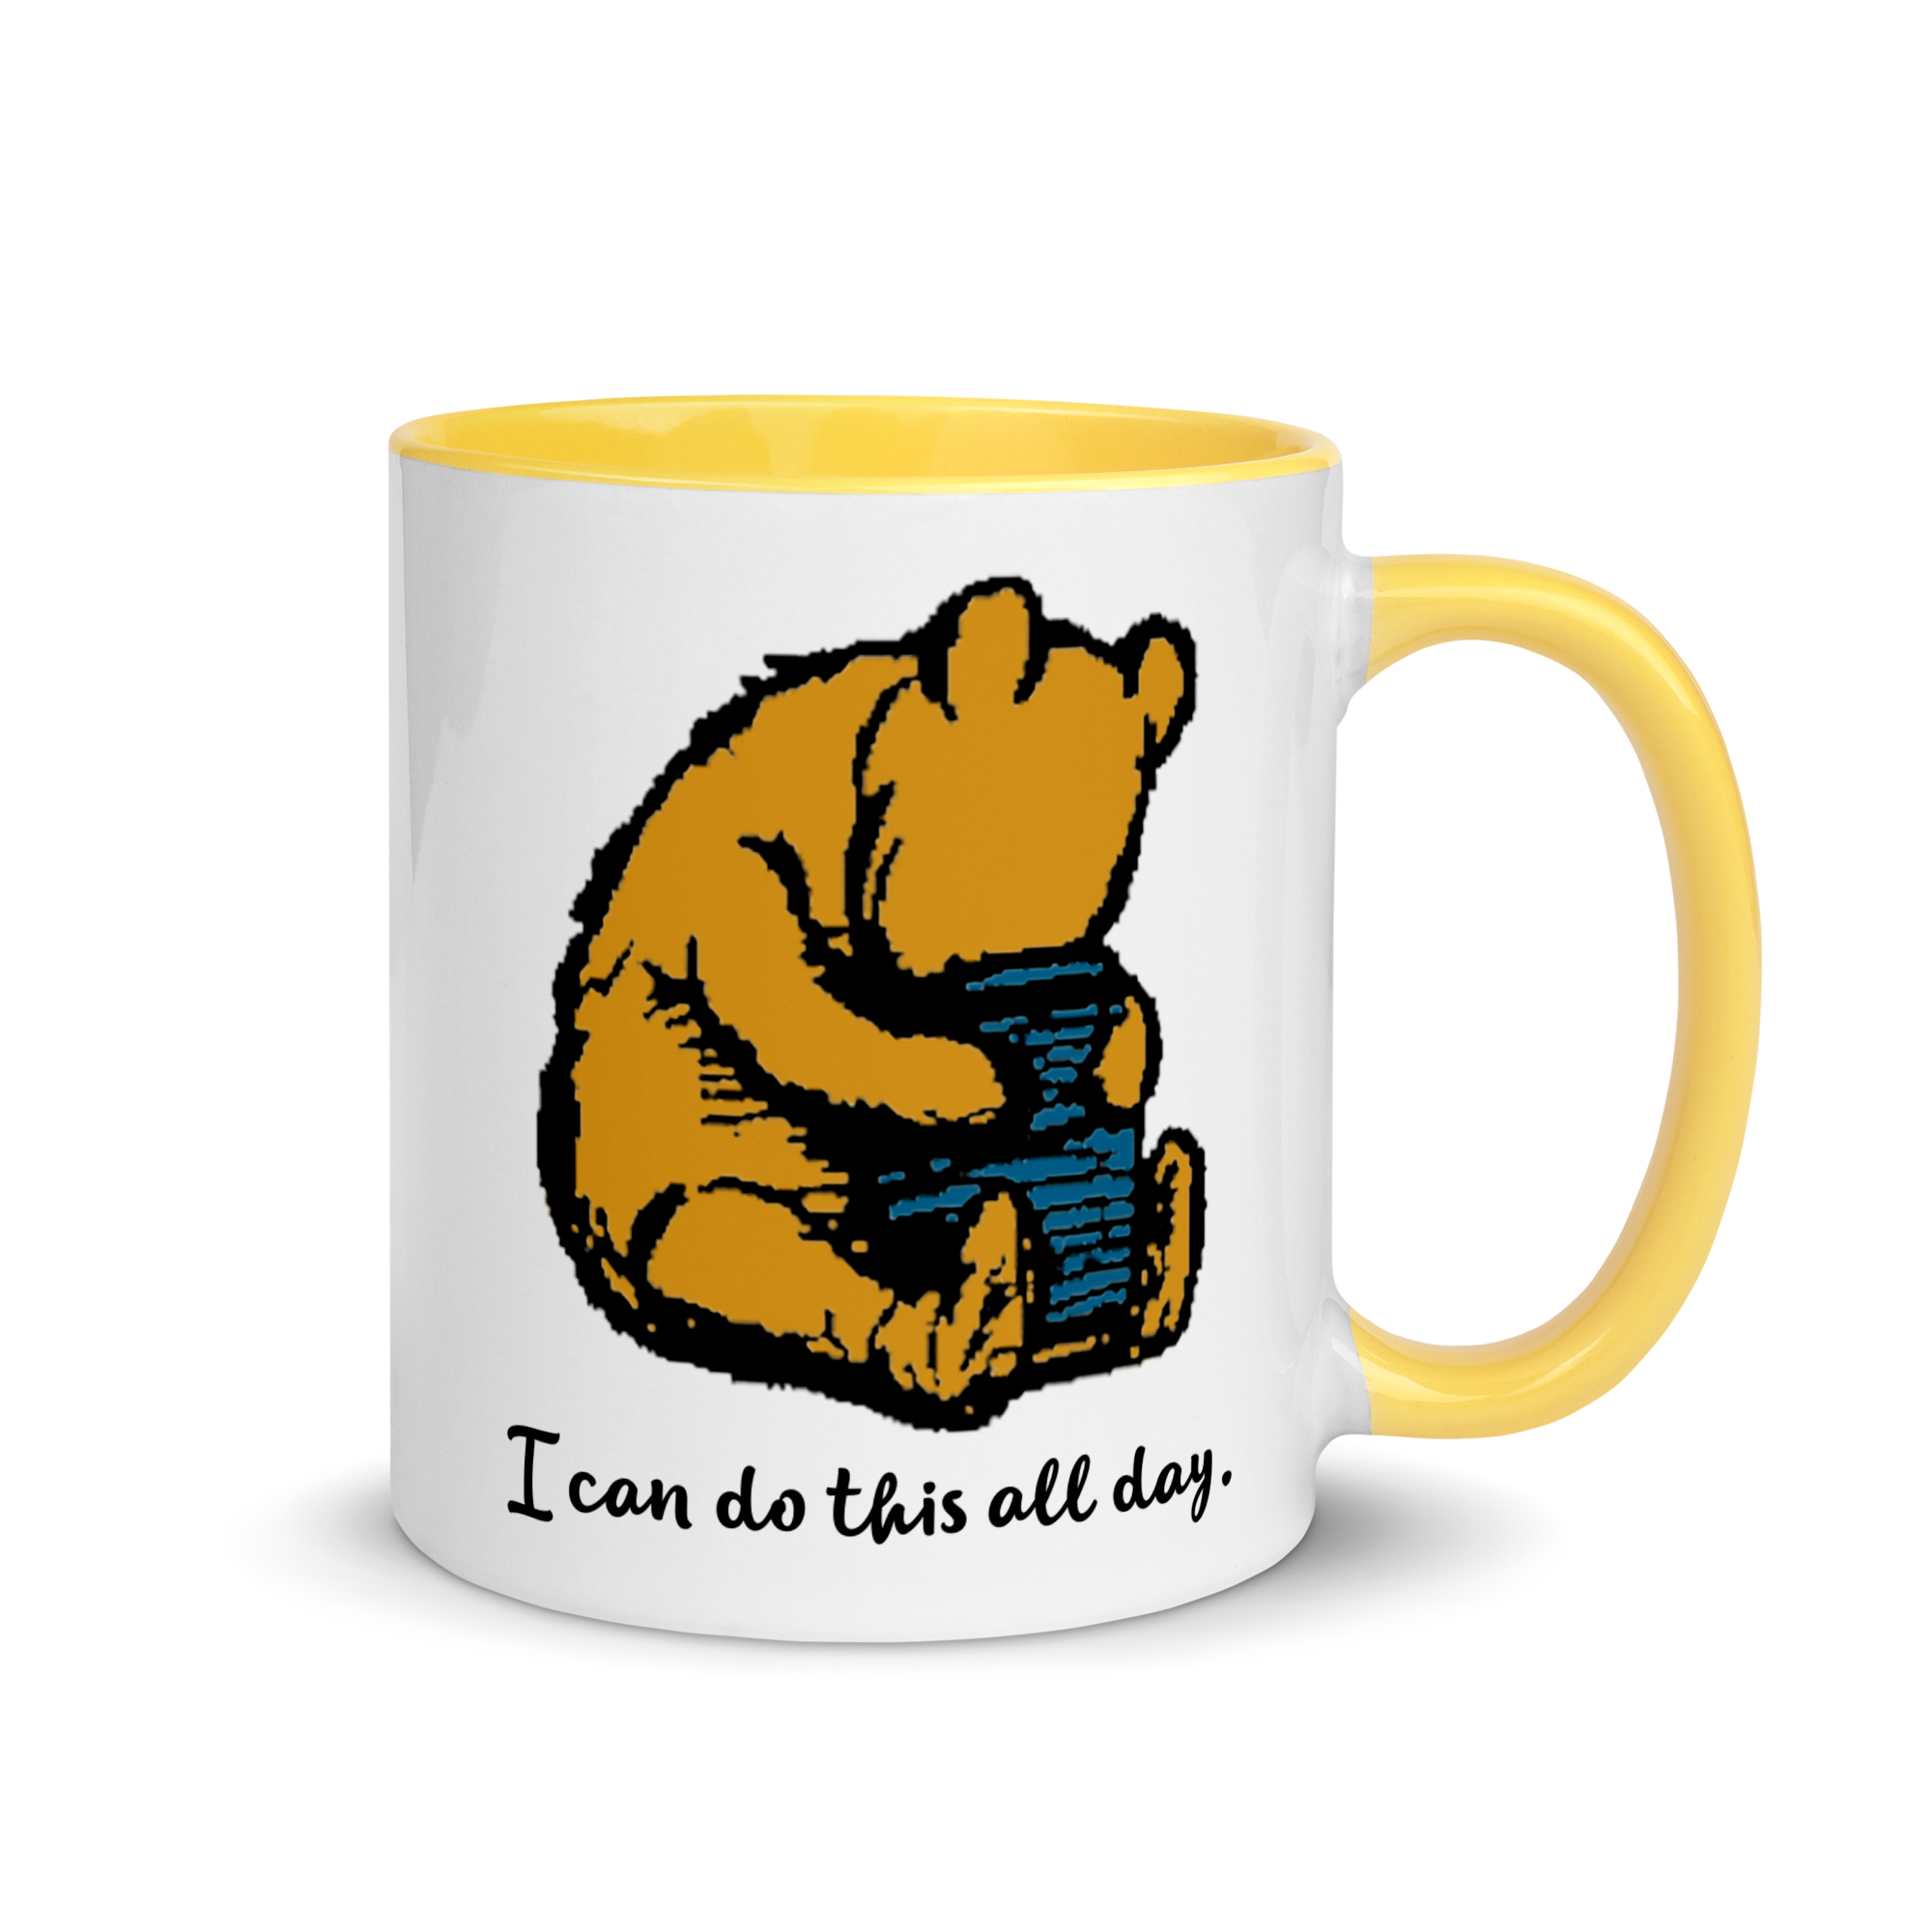 Classic Winnie-the-Pooh Mug with Yellow Inside